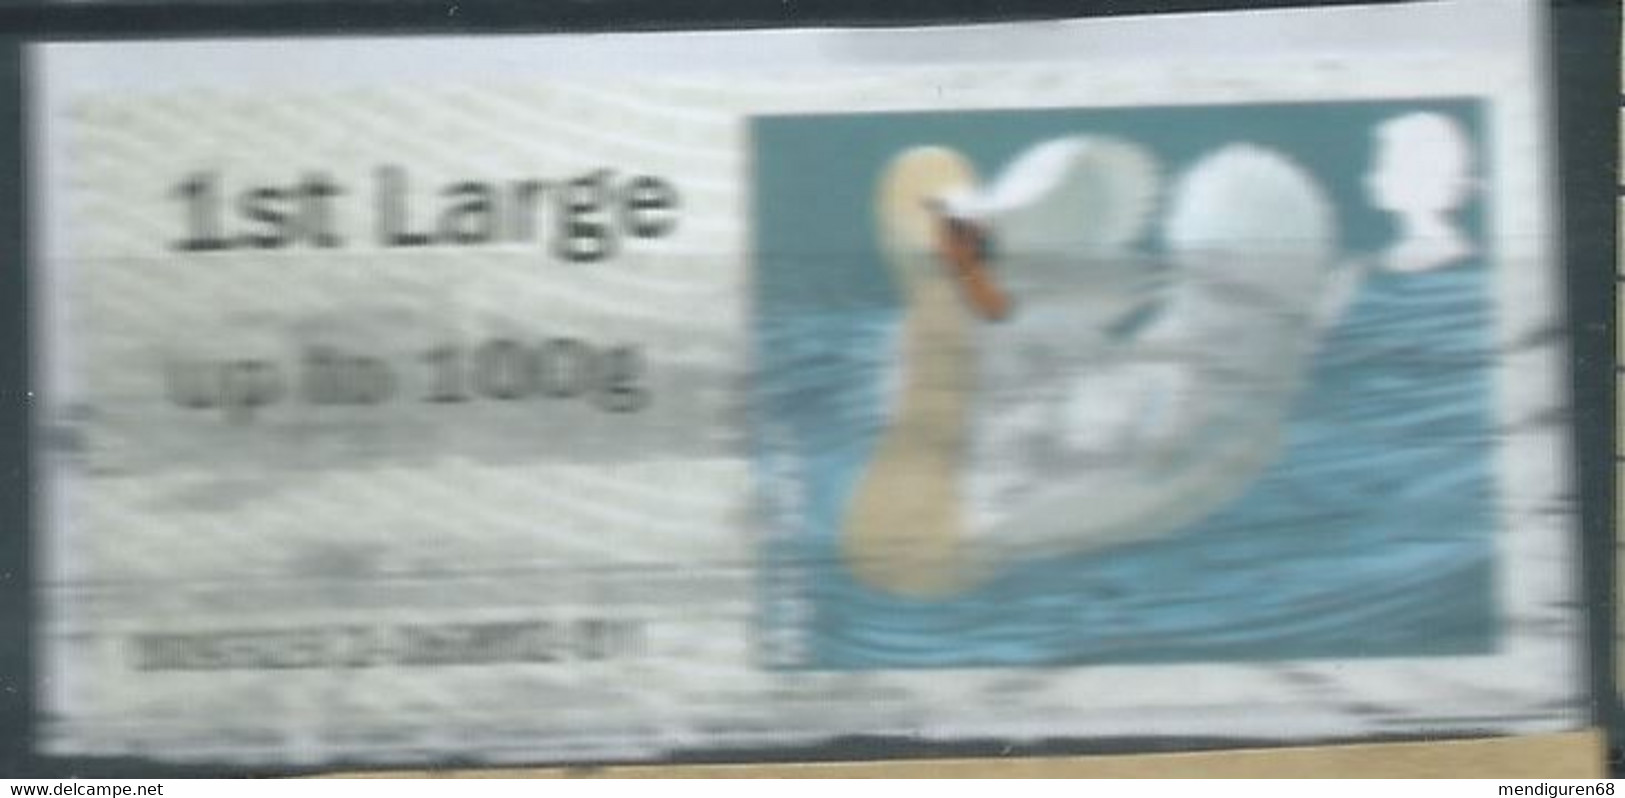 GROSBRITANNIEN GRANDE BRETAGNE GB 2011 POST&GO BIRDS (3) USED ON PAPER SG FS20 MI ATM19 YT TD19 - Post & Go (automatenmarken)